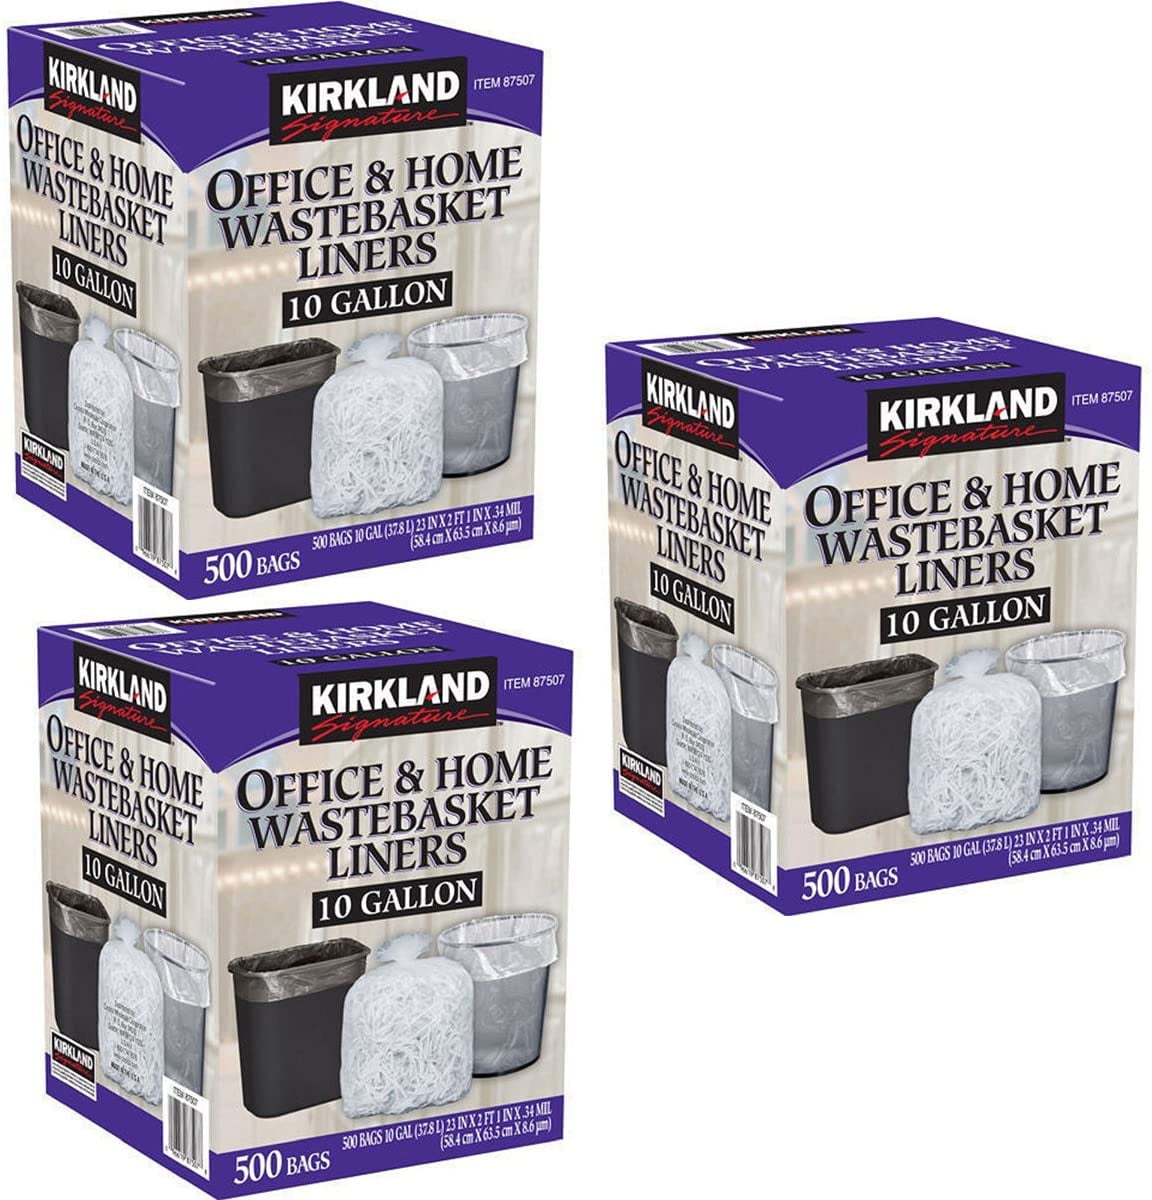 Kirkland Signature 10-Gallon Wastebasket Liner, Clear, 500-count